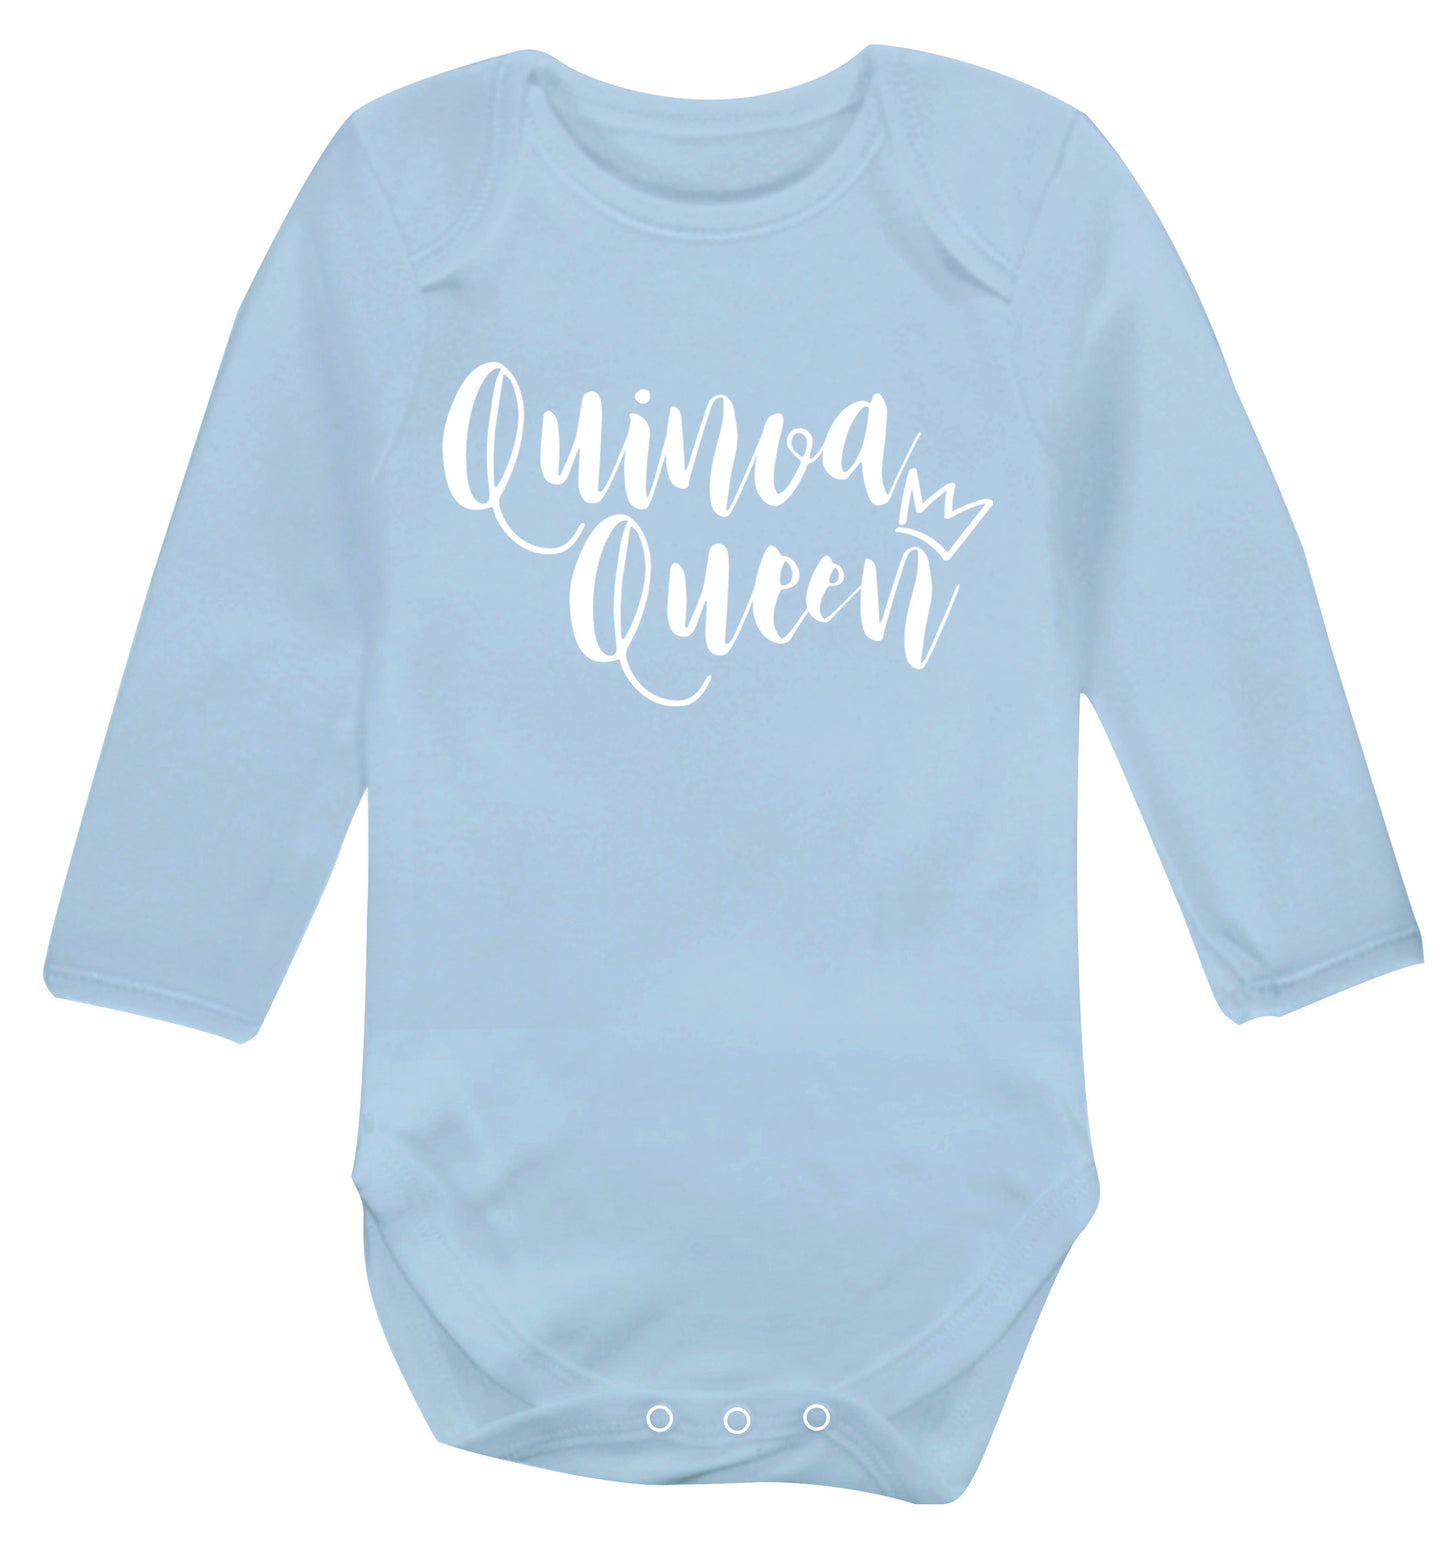 Quinoa Queen Baby Vest long sleeved pale blue 6-12 months